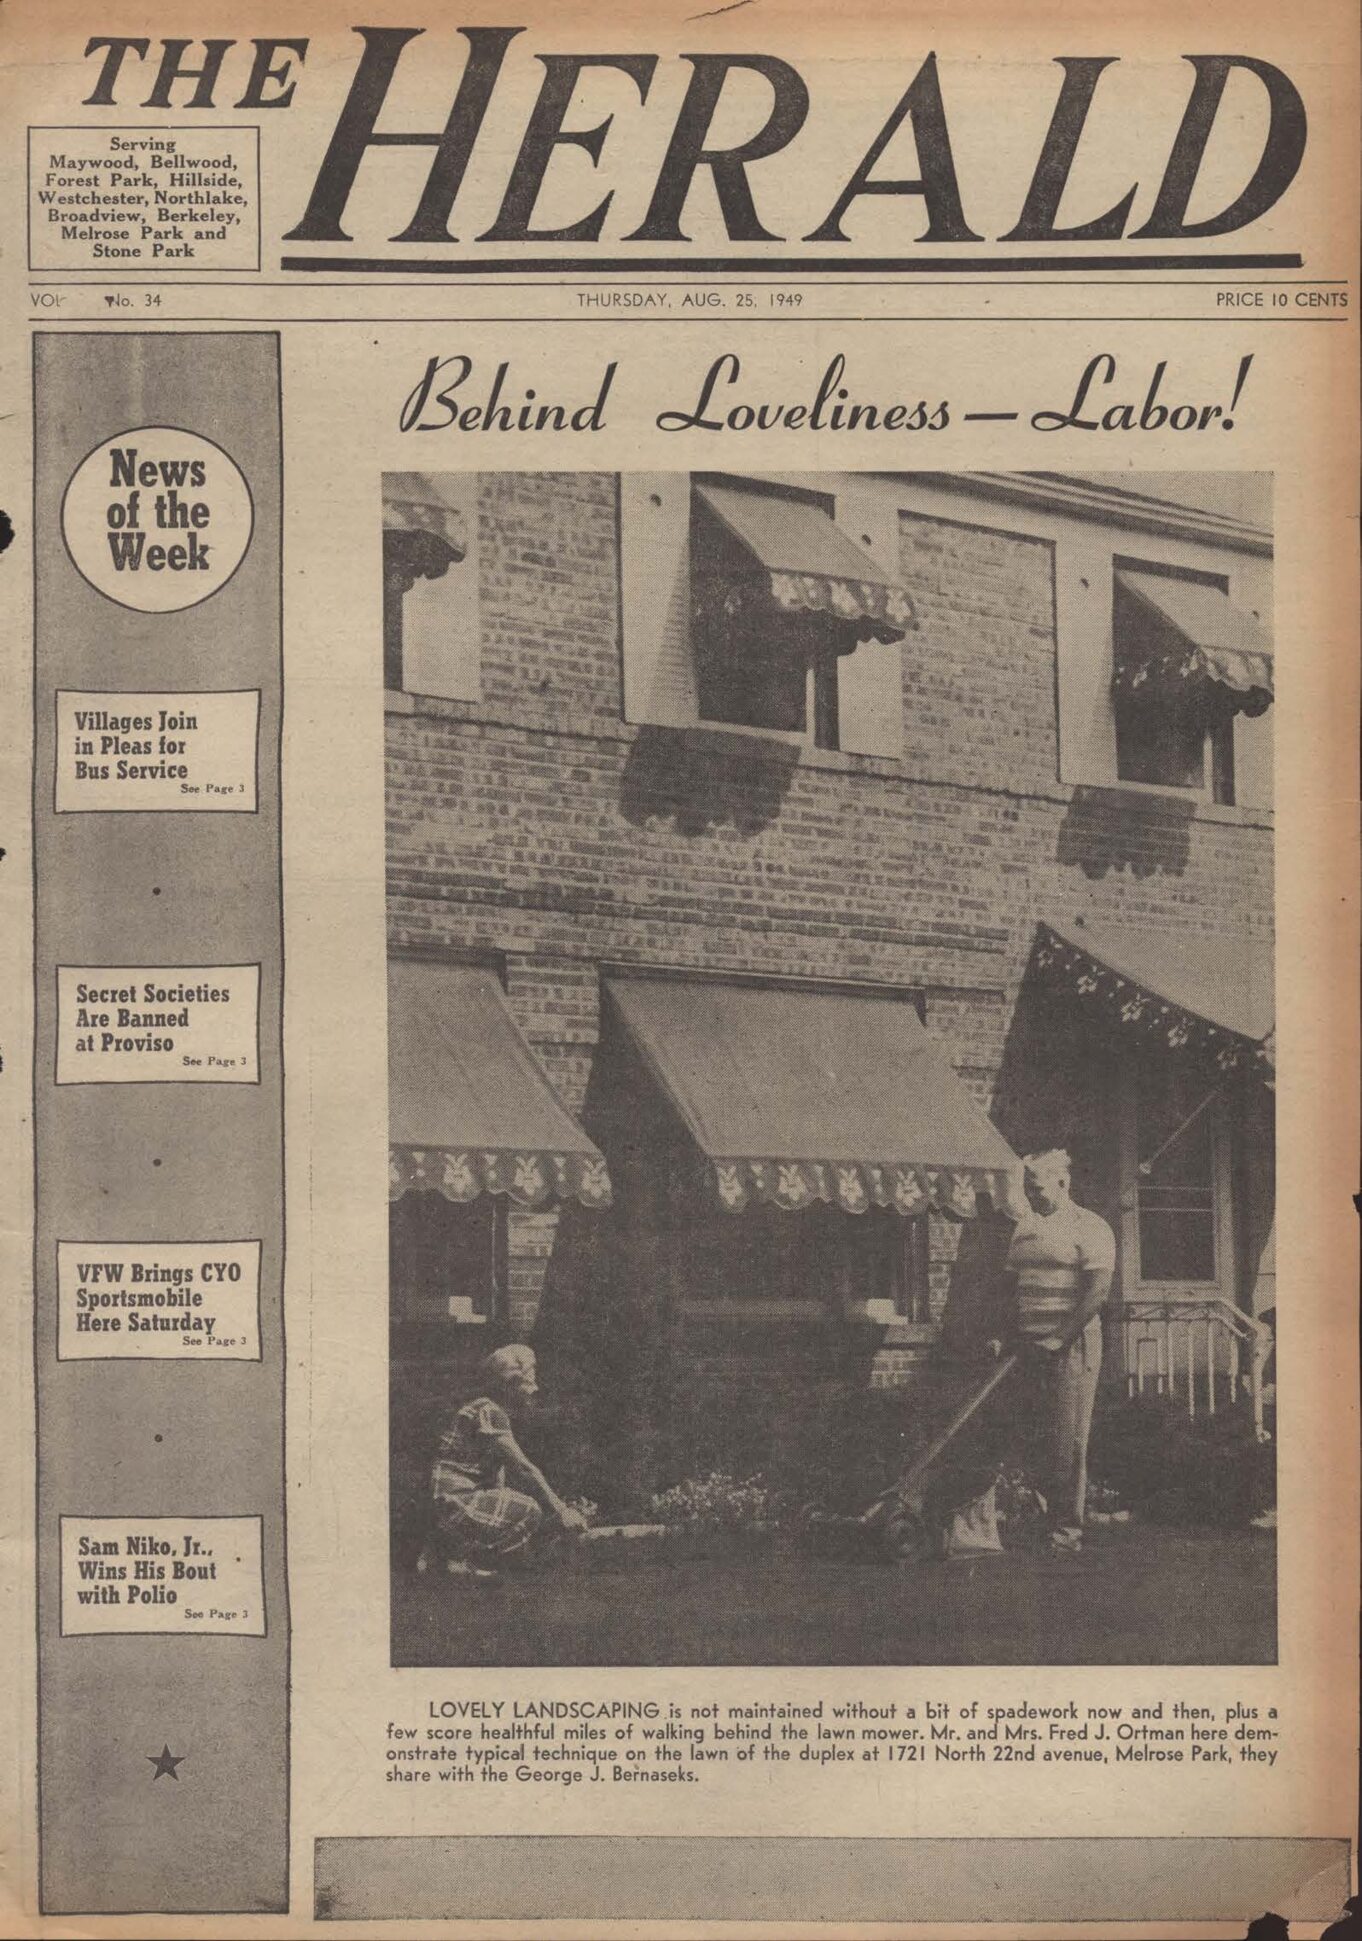 The Herald – 19490825